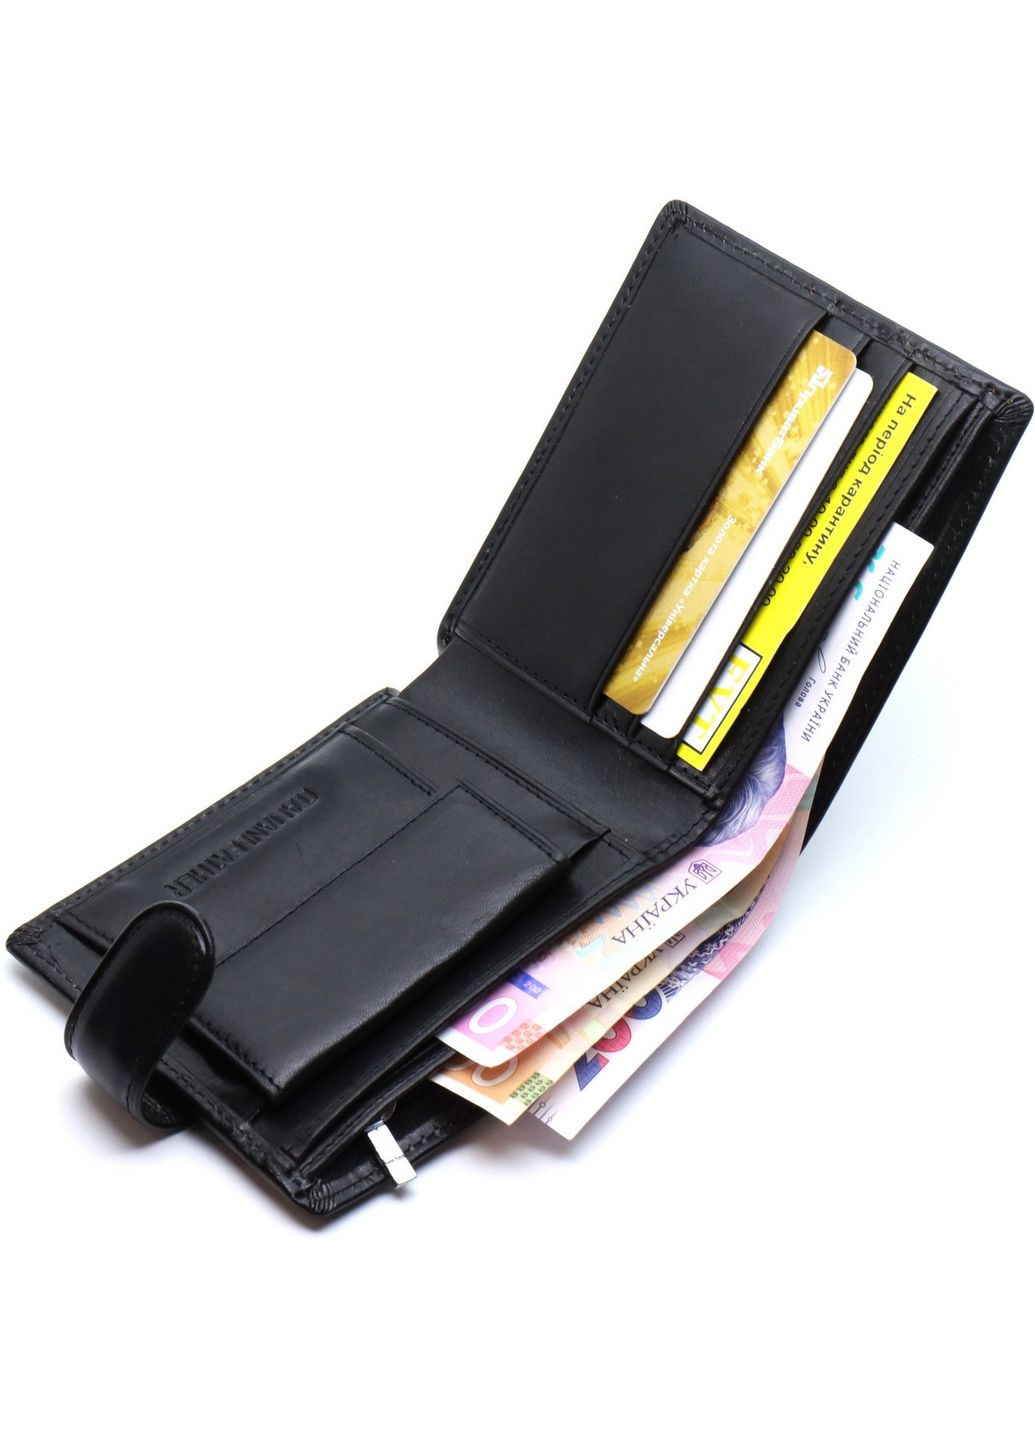 Кожаное мужское портмоне ST Leather Accessories (288184561)